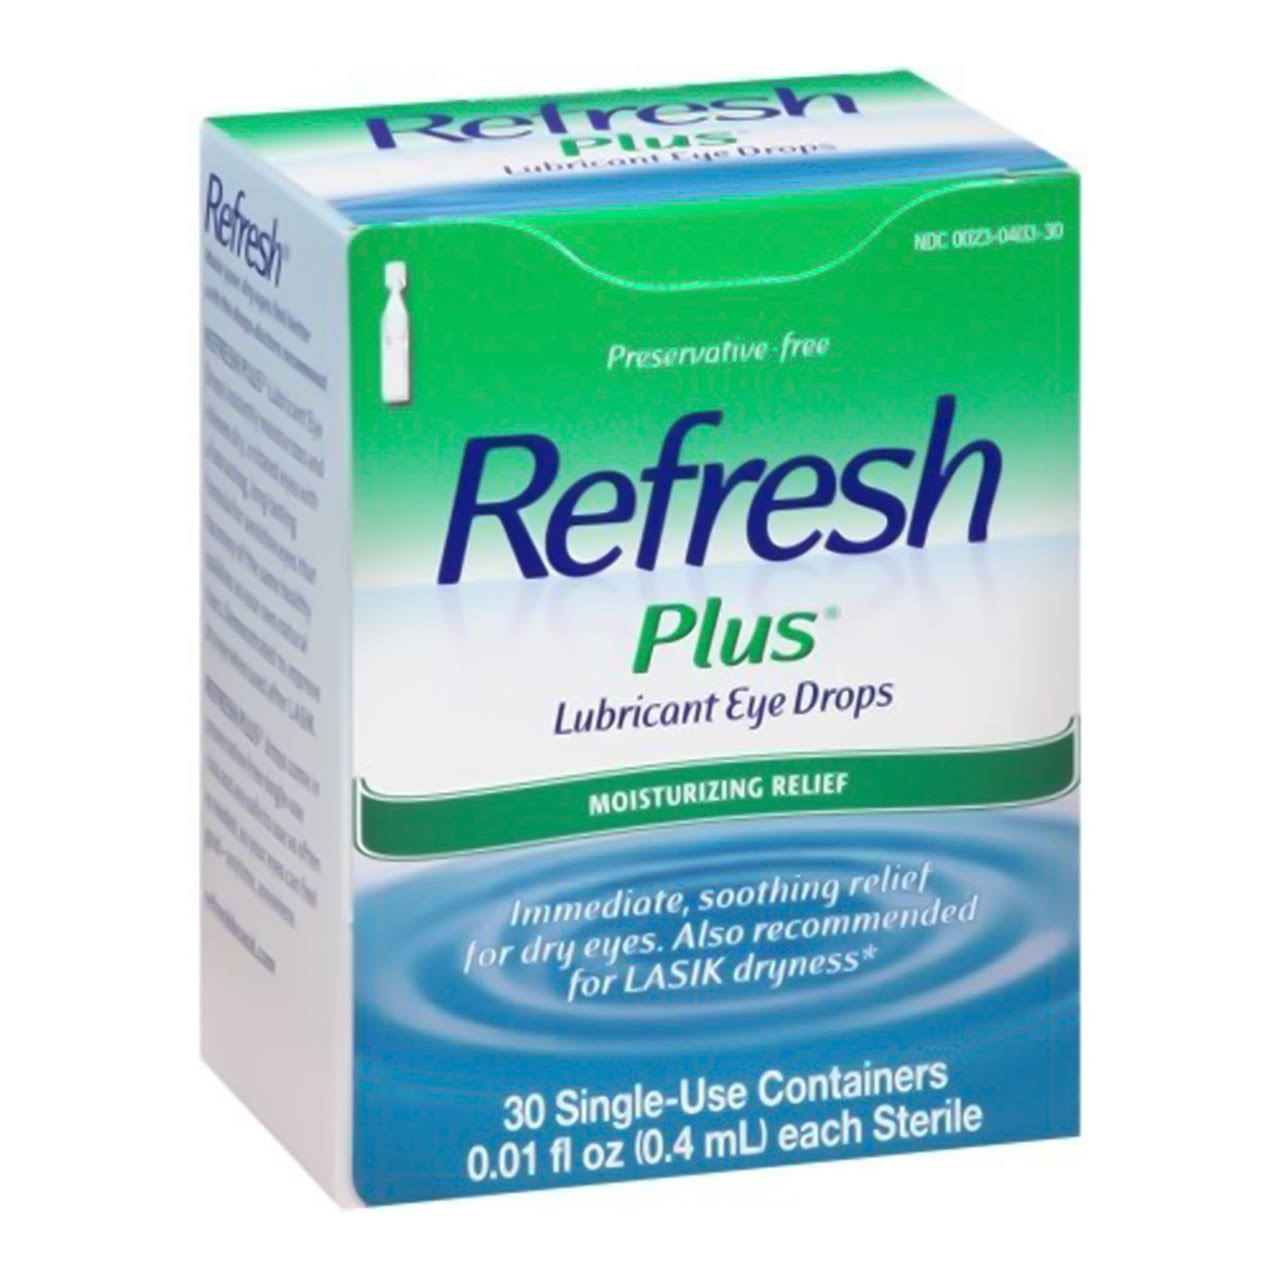 Refresh Relieva PF Eye Drops, Preservative-Free, Lubricant - 0.33 fl oz